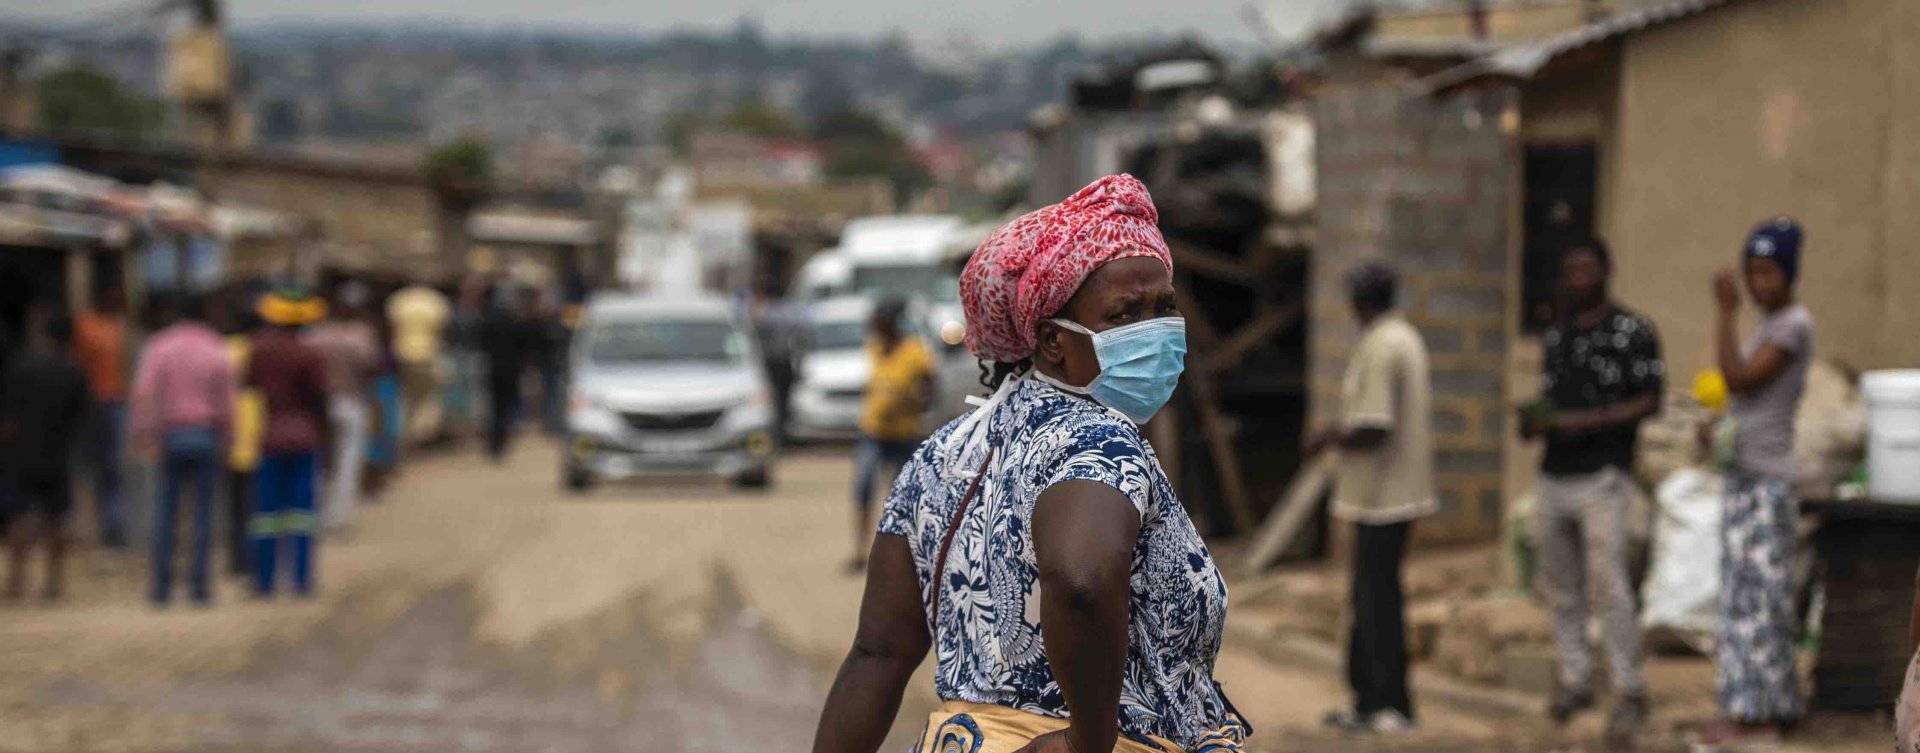 Zimbabwe: Covid-19 tracker to prevent pandemic spread